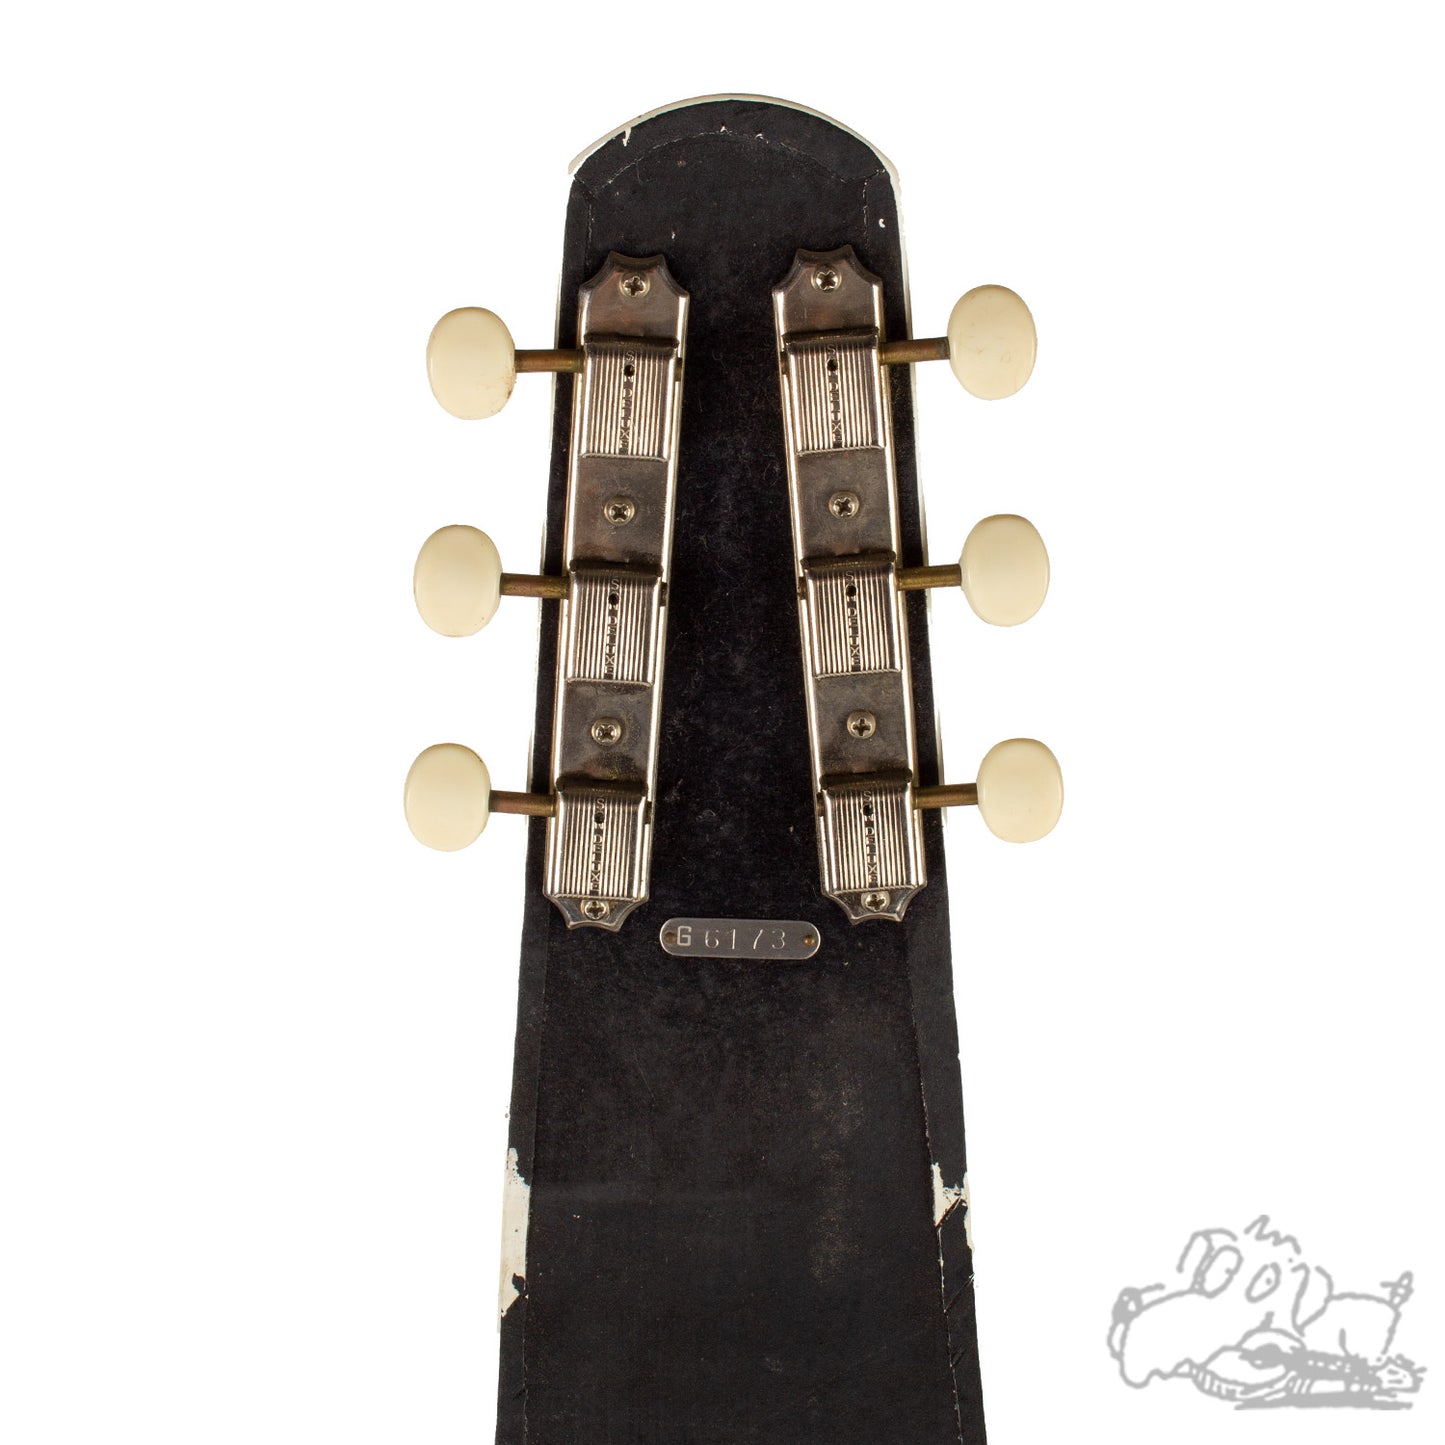 1941 Supro Comet White Lap Steel Guitar